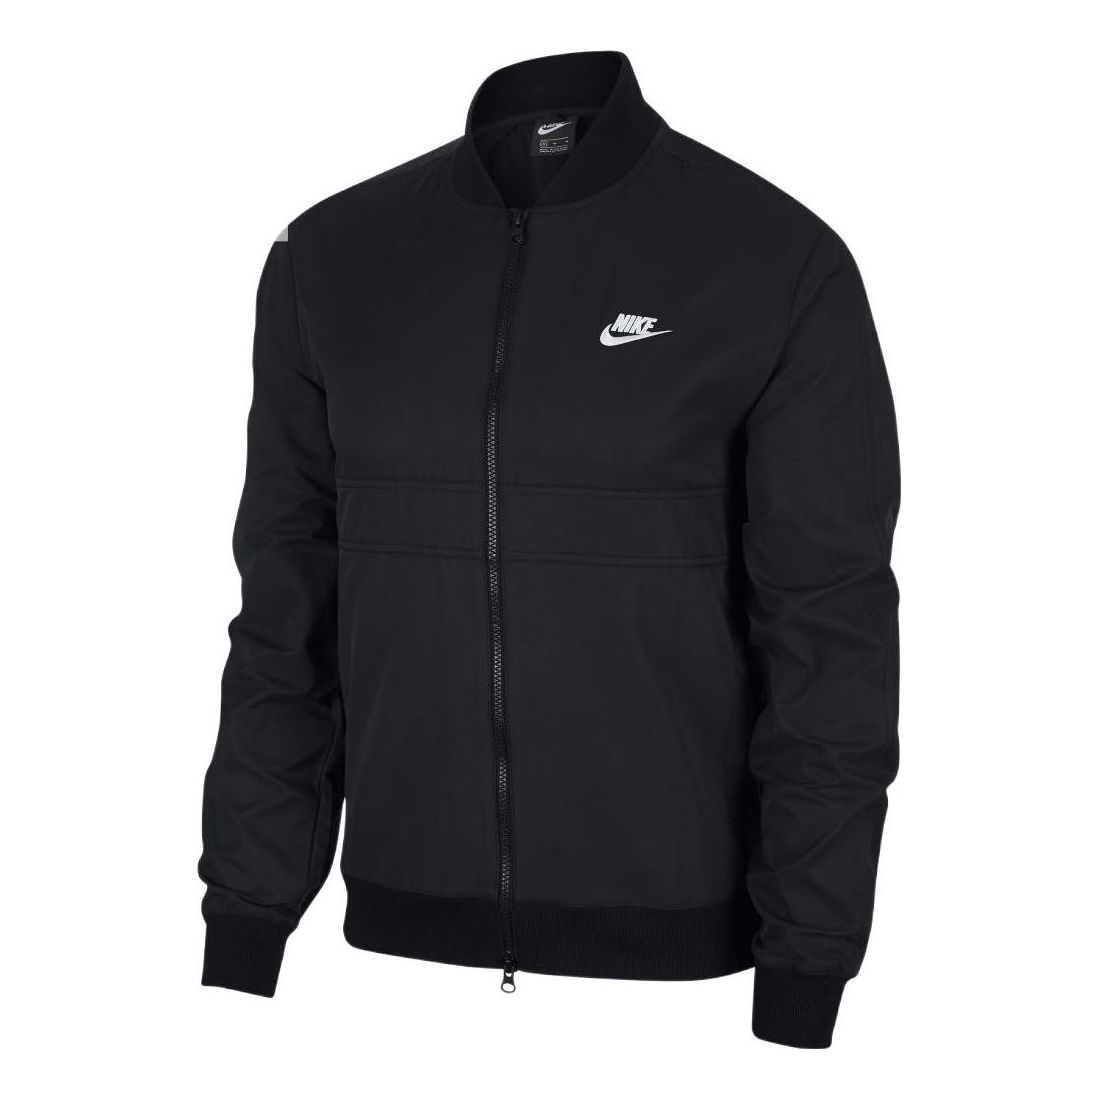 Nike logo zipped jacket 'Black' DN4459-010 - KICKS CREW